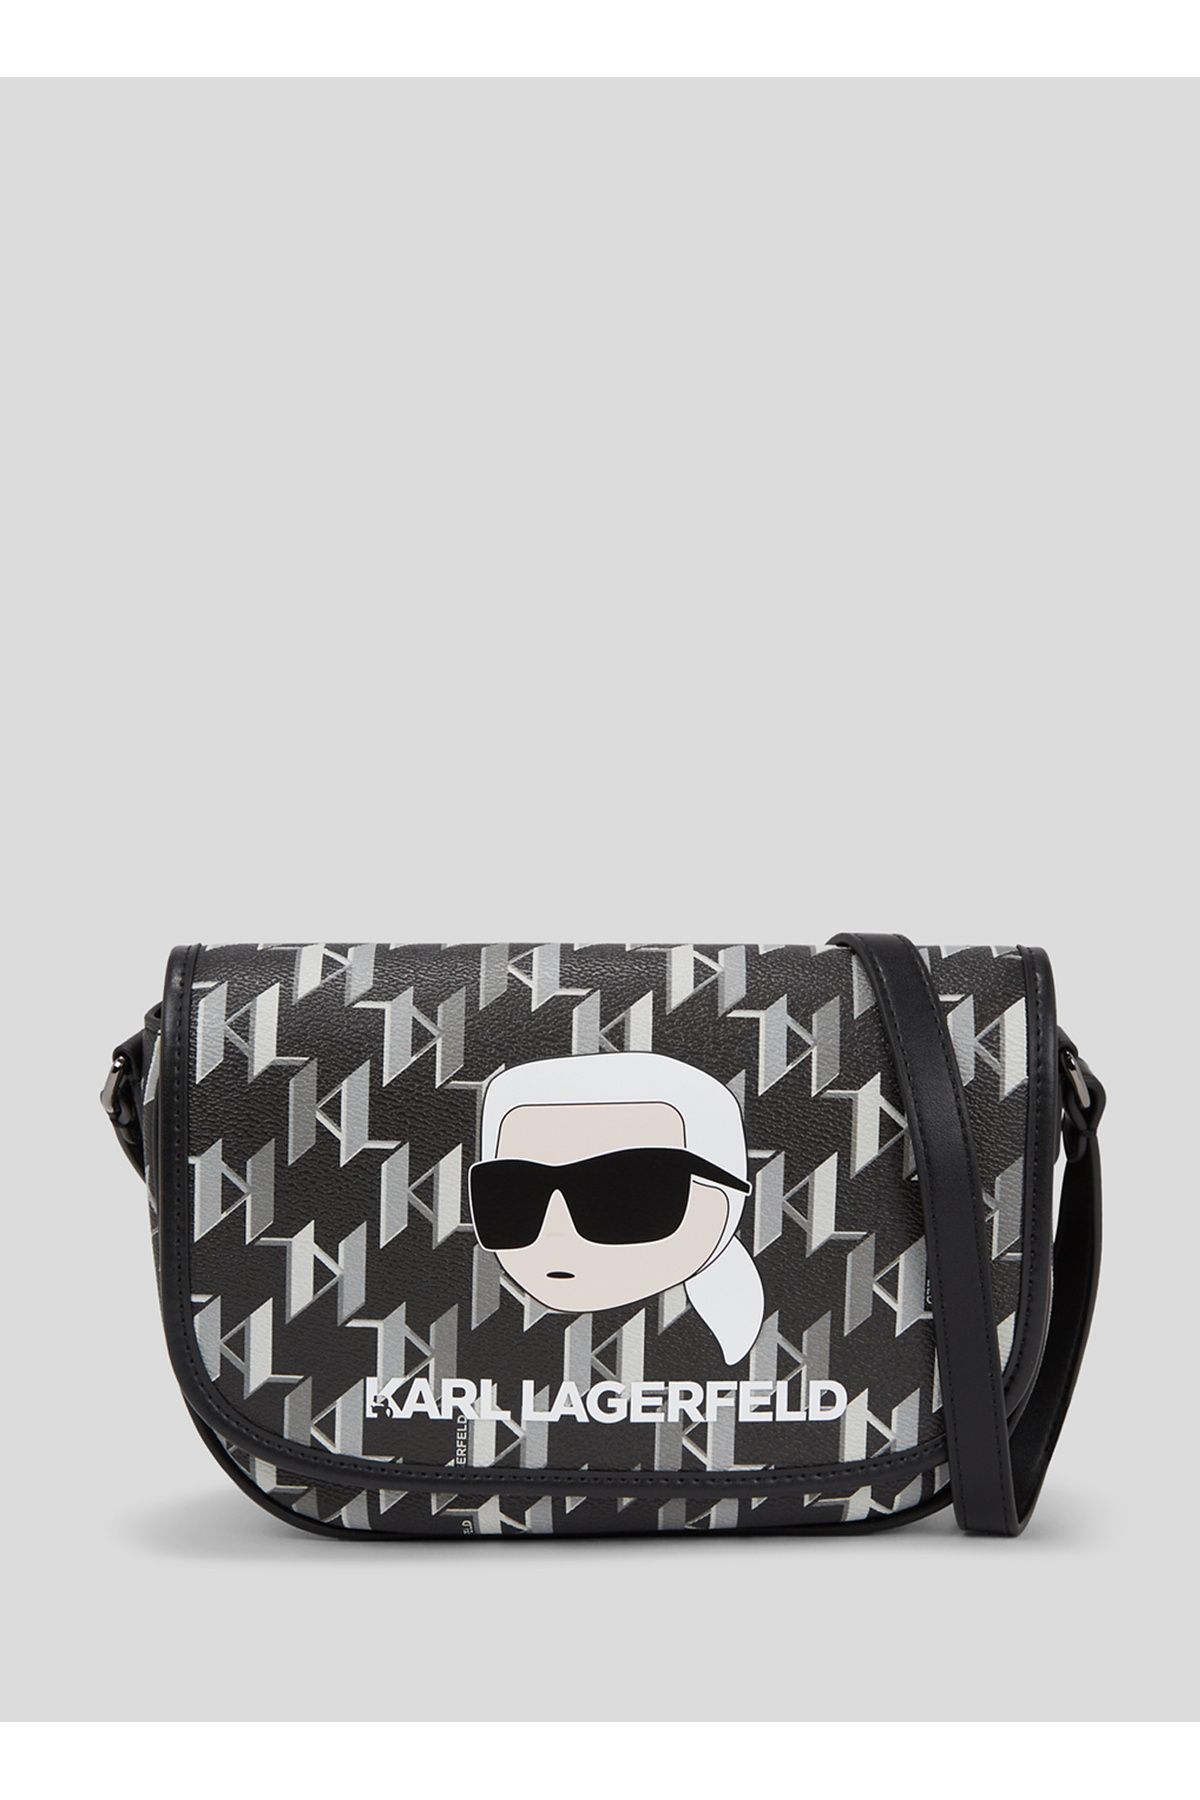 Karl Lagerfeld Siyah - Beyaz Kadın 23,5x16,5x6,5 cm Çapraz Çanta 235W3098998